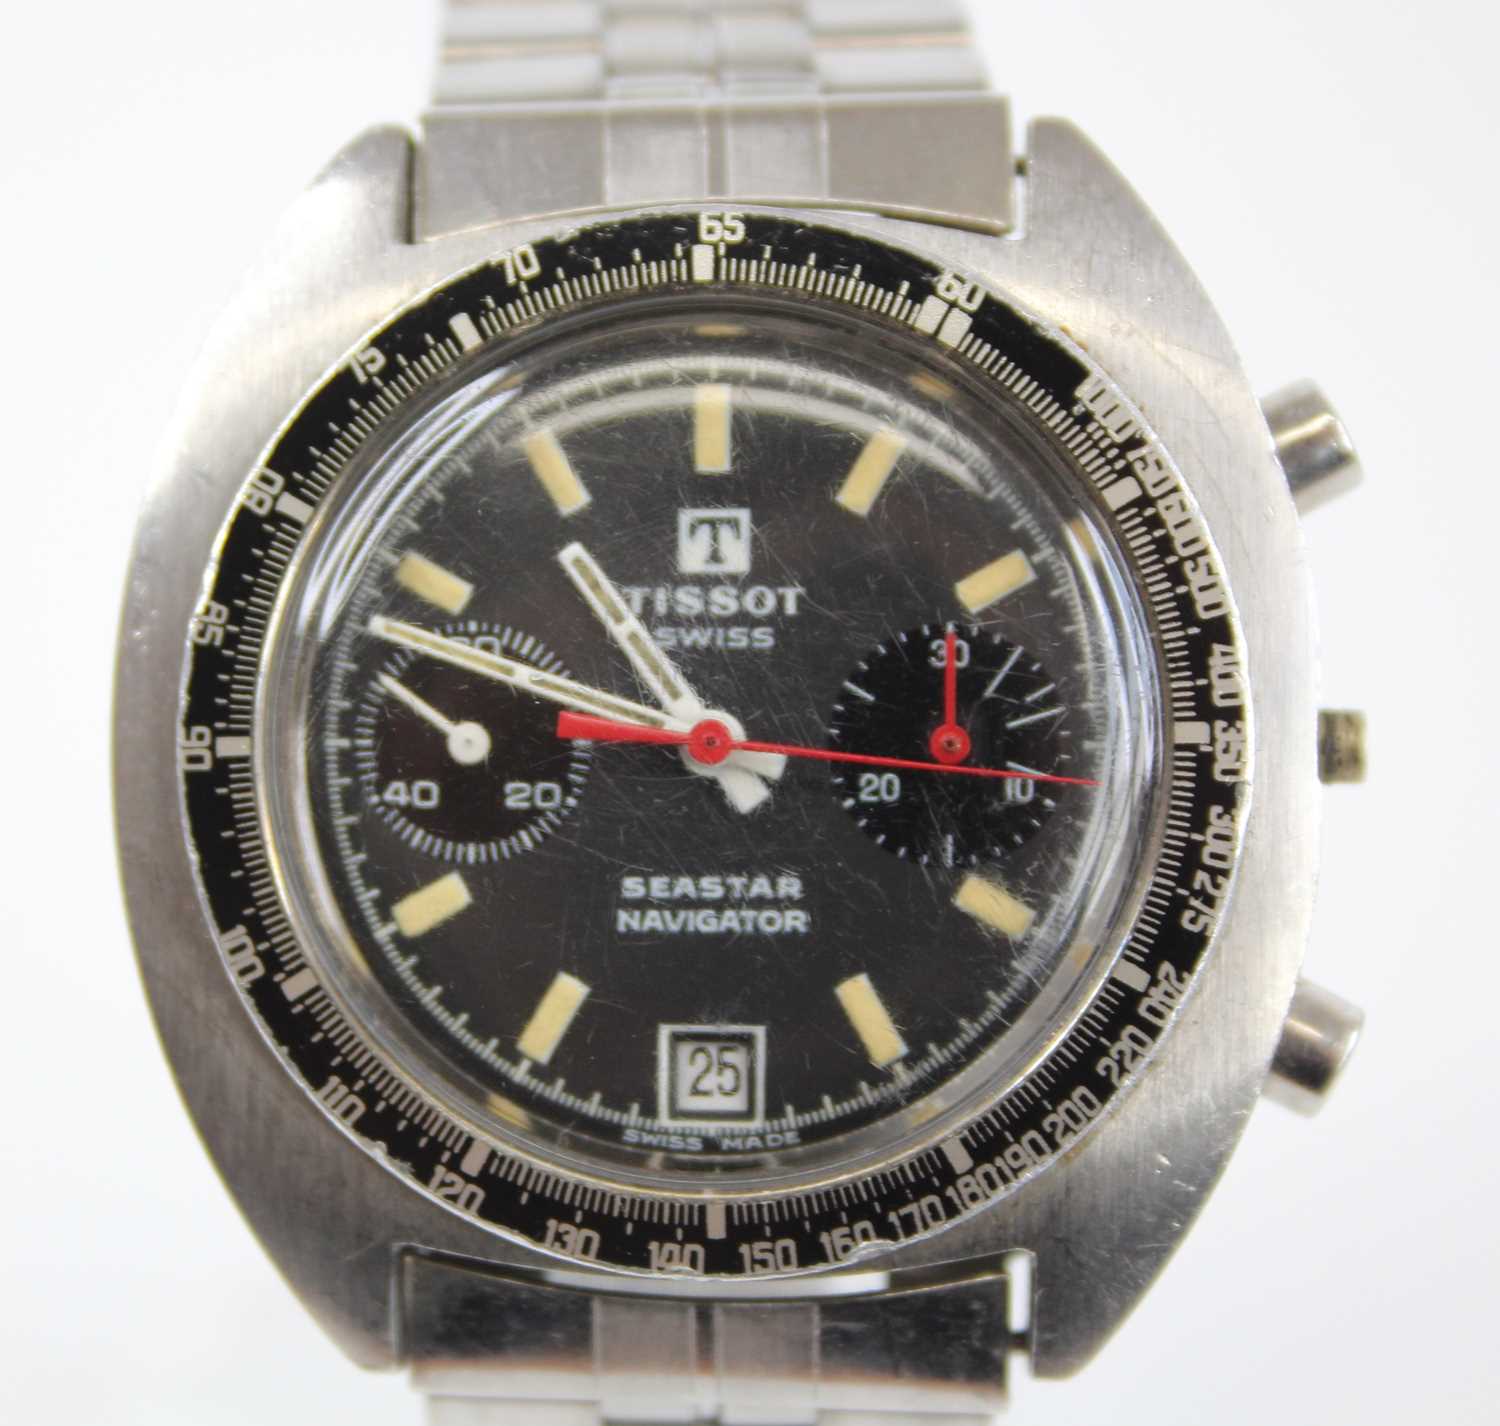 A gent's Tissot Swiss Seastar Navigator stainless steel chronograph automatic wristwatch, having